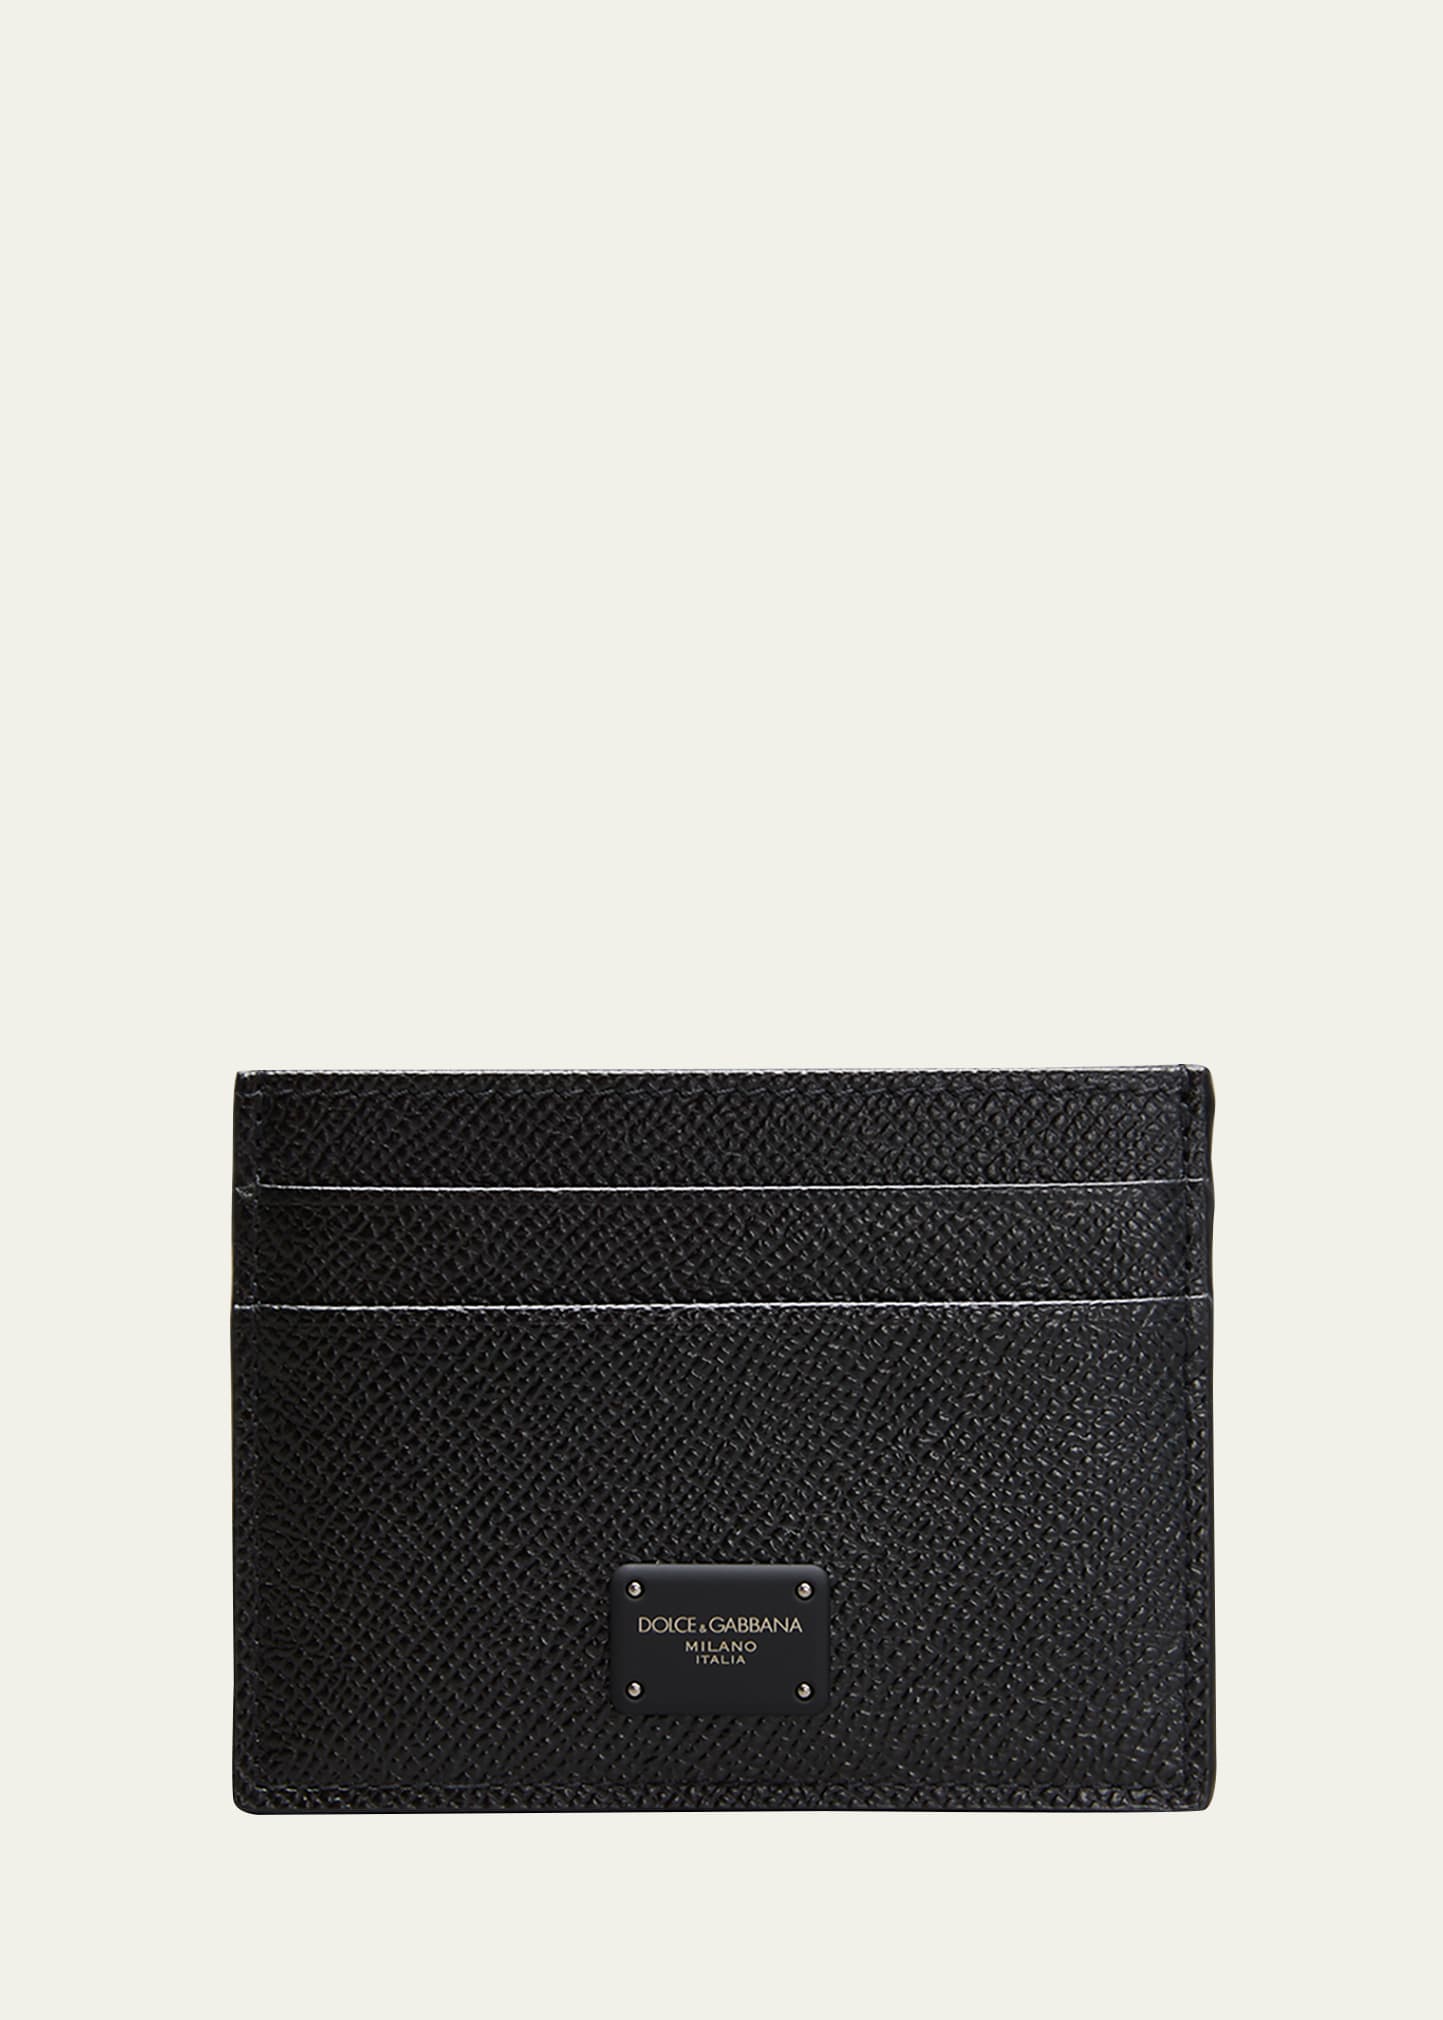 Dolce & Gabbana Men's Dauphine Leather Card Holder